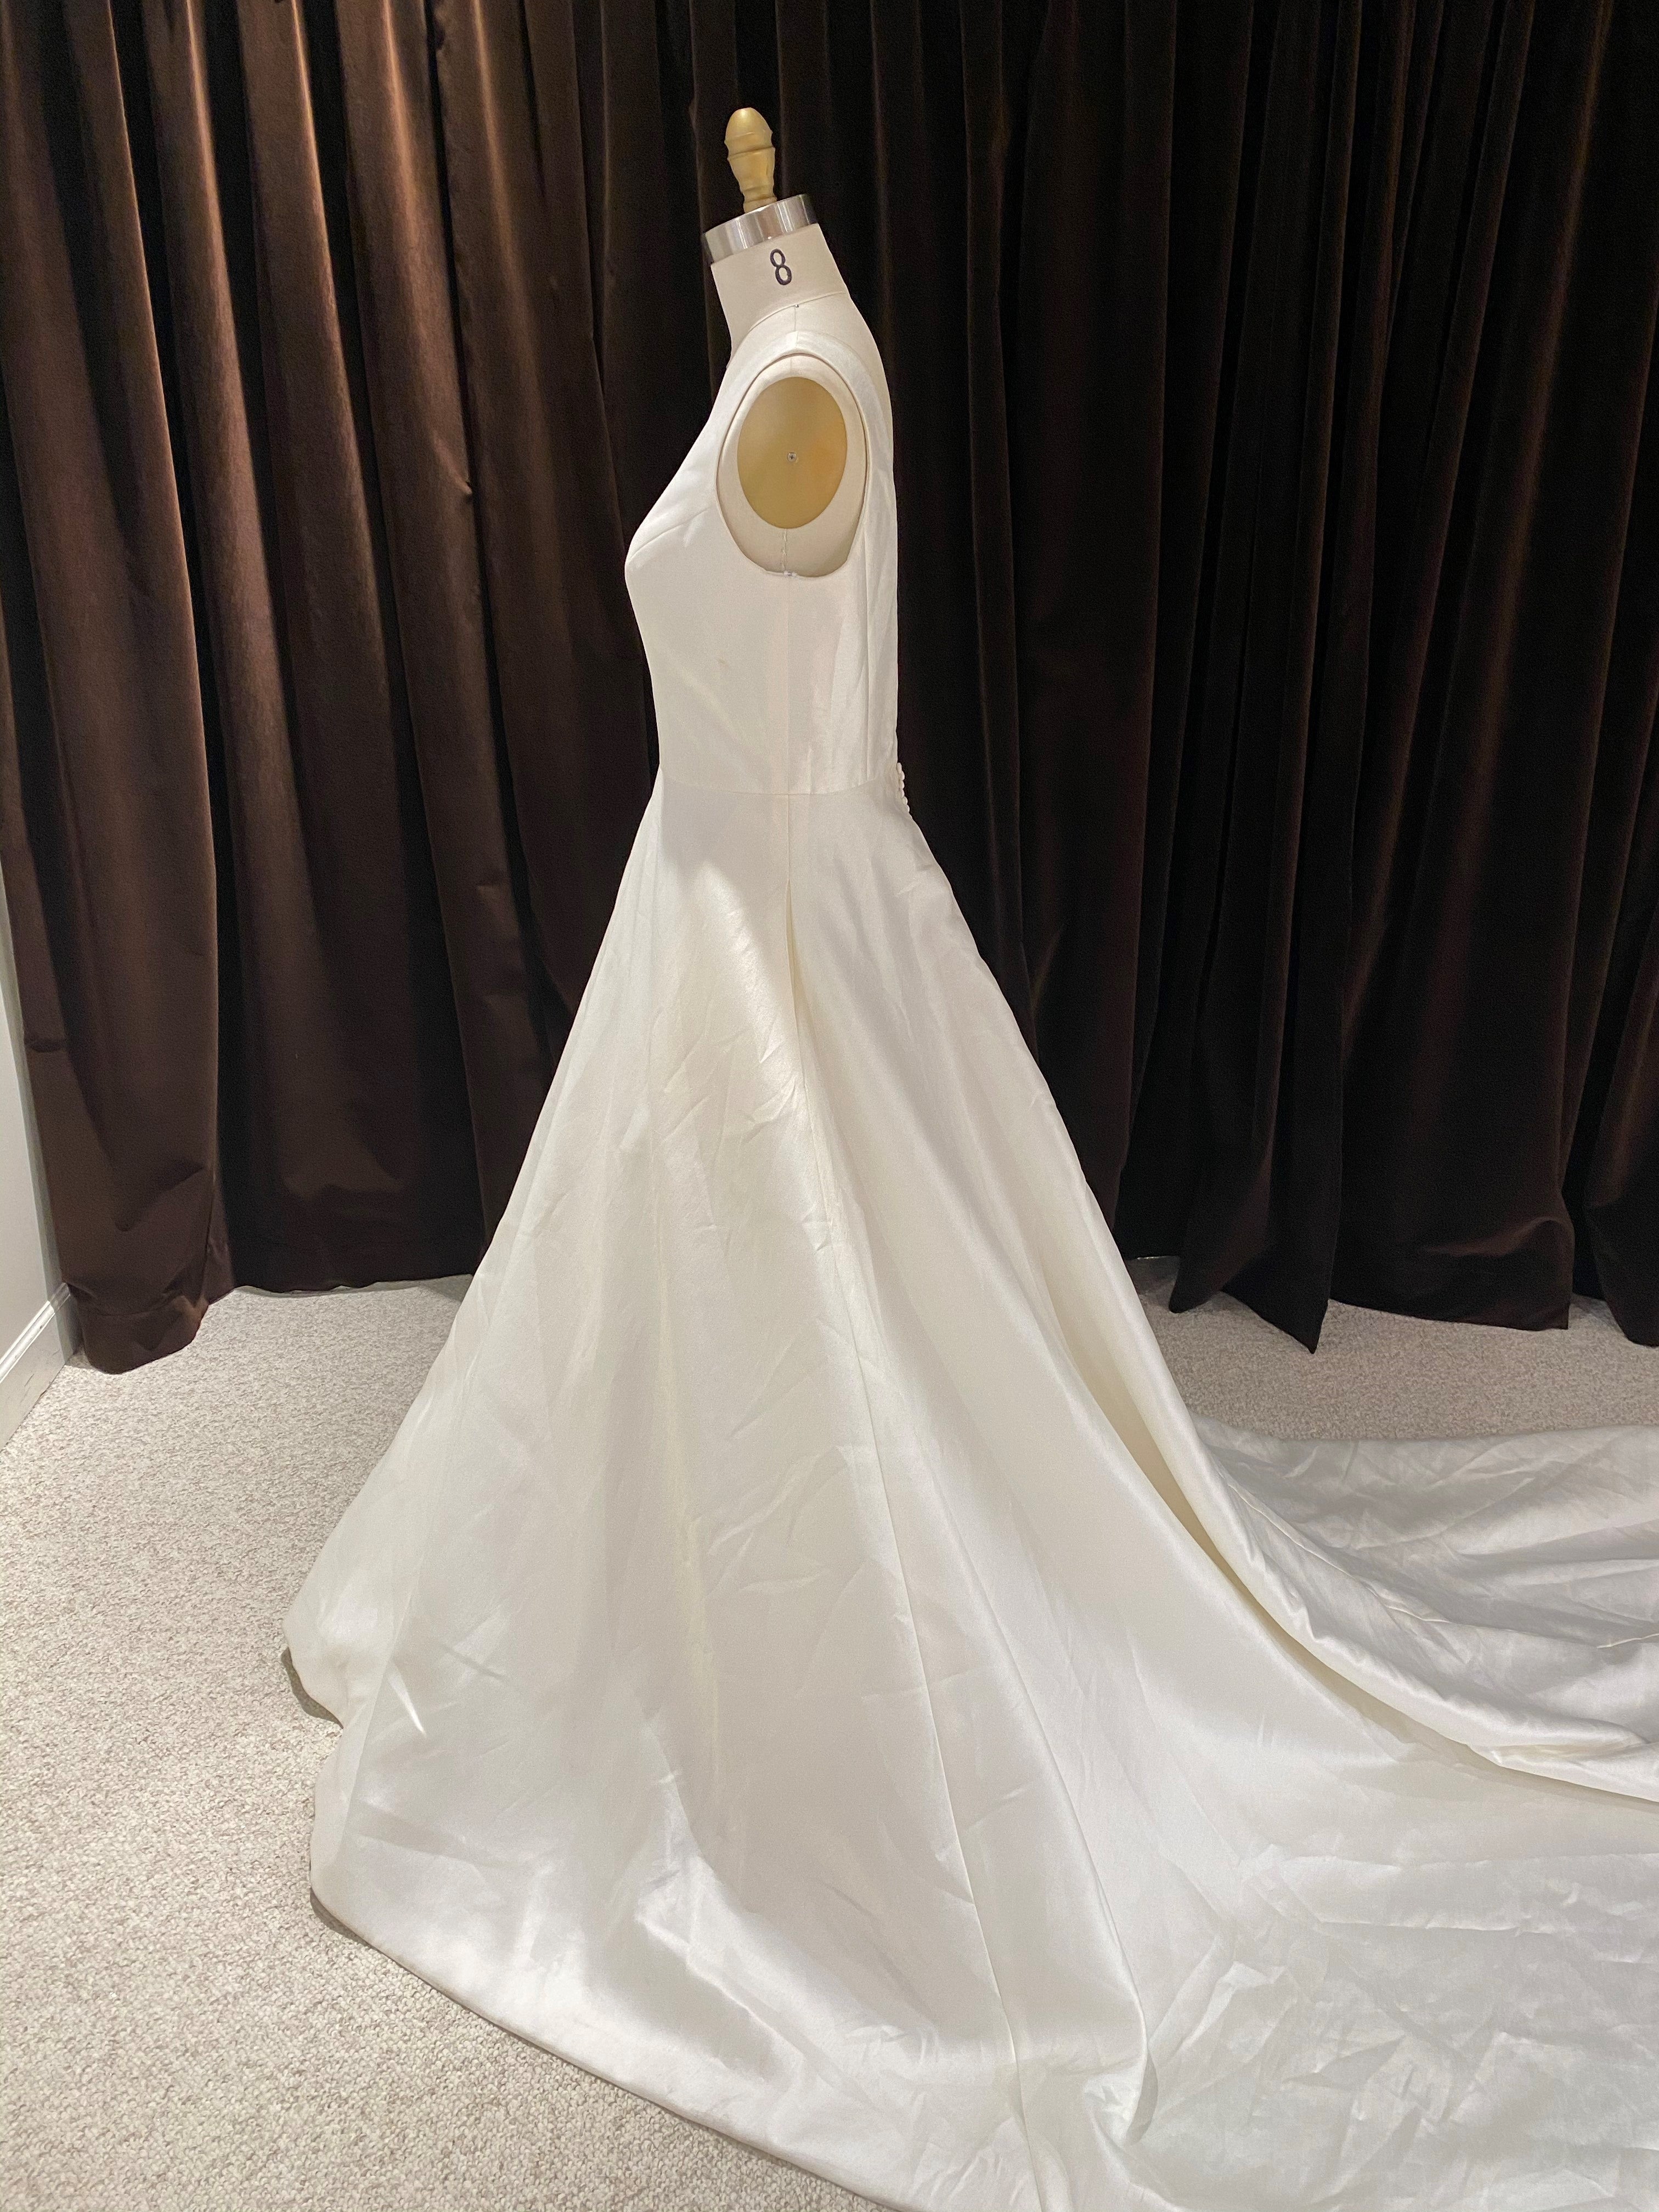 GC#911798 - Sareh Nouri Waldorf Wedding Dress in Size 12